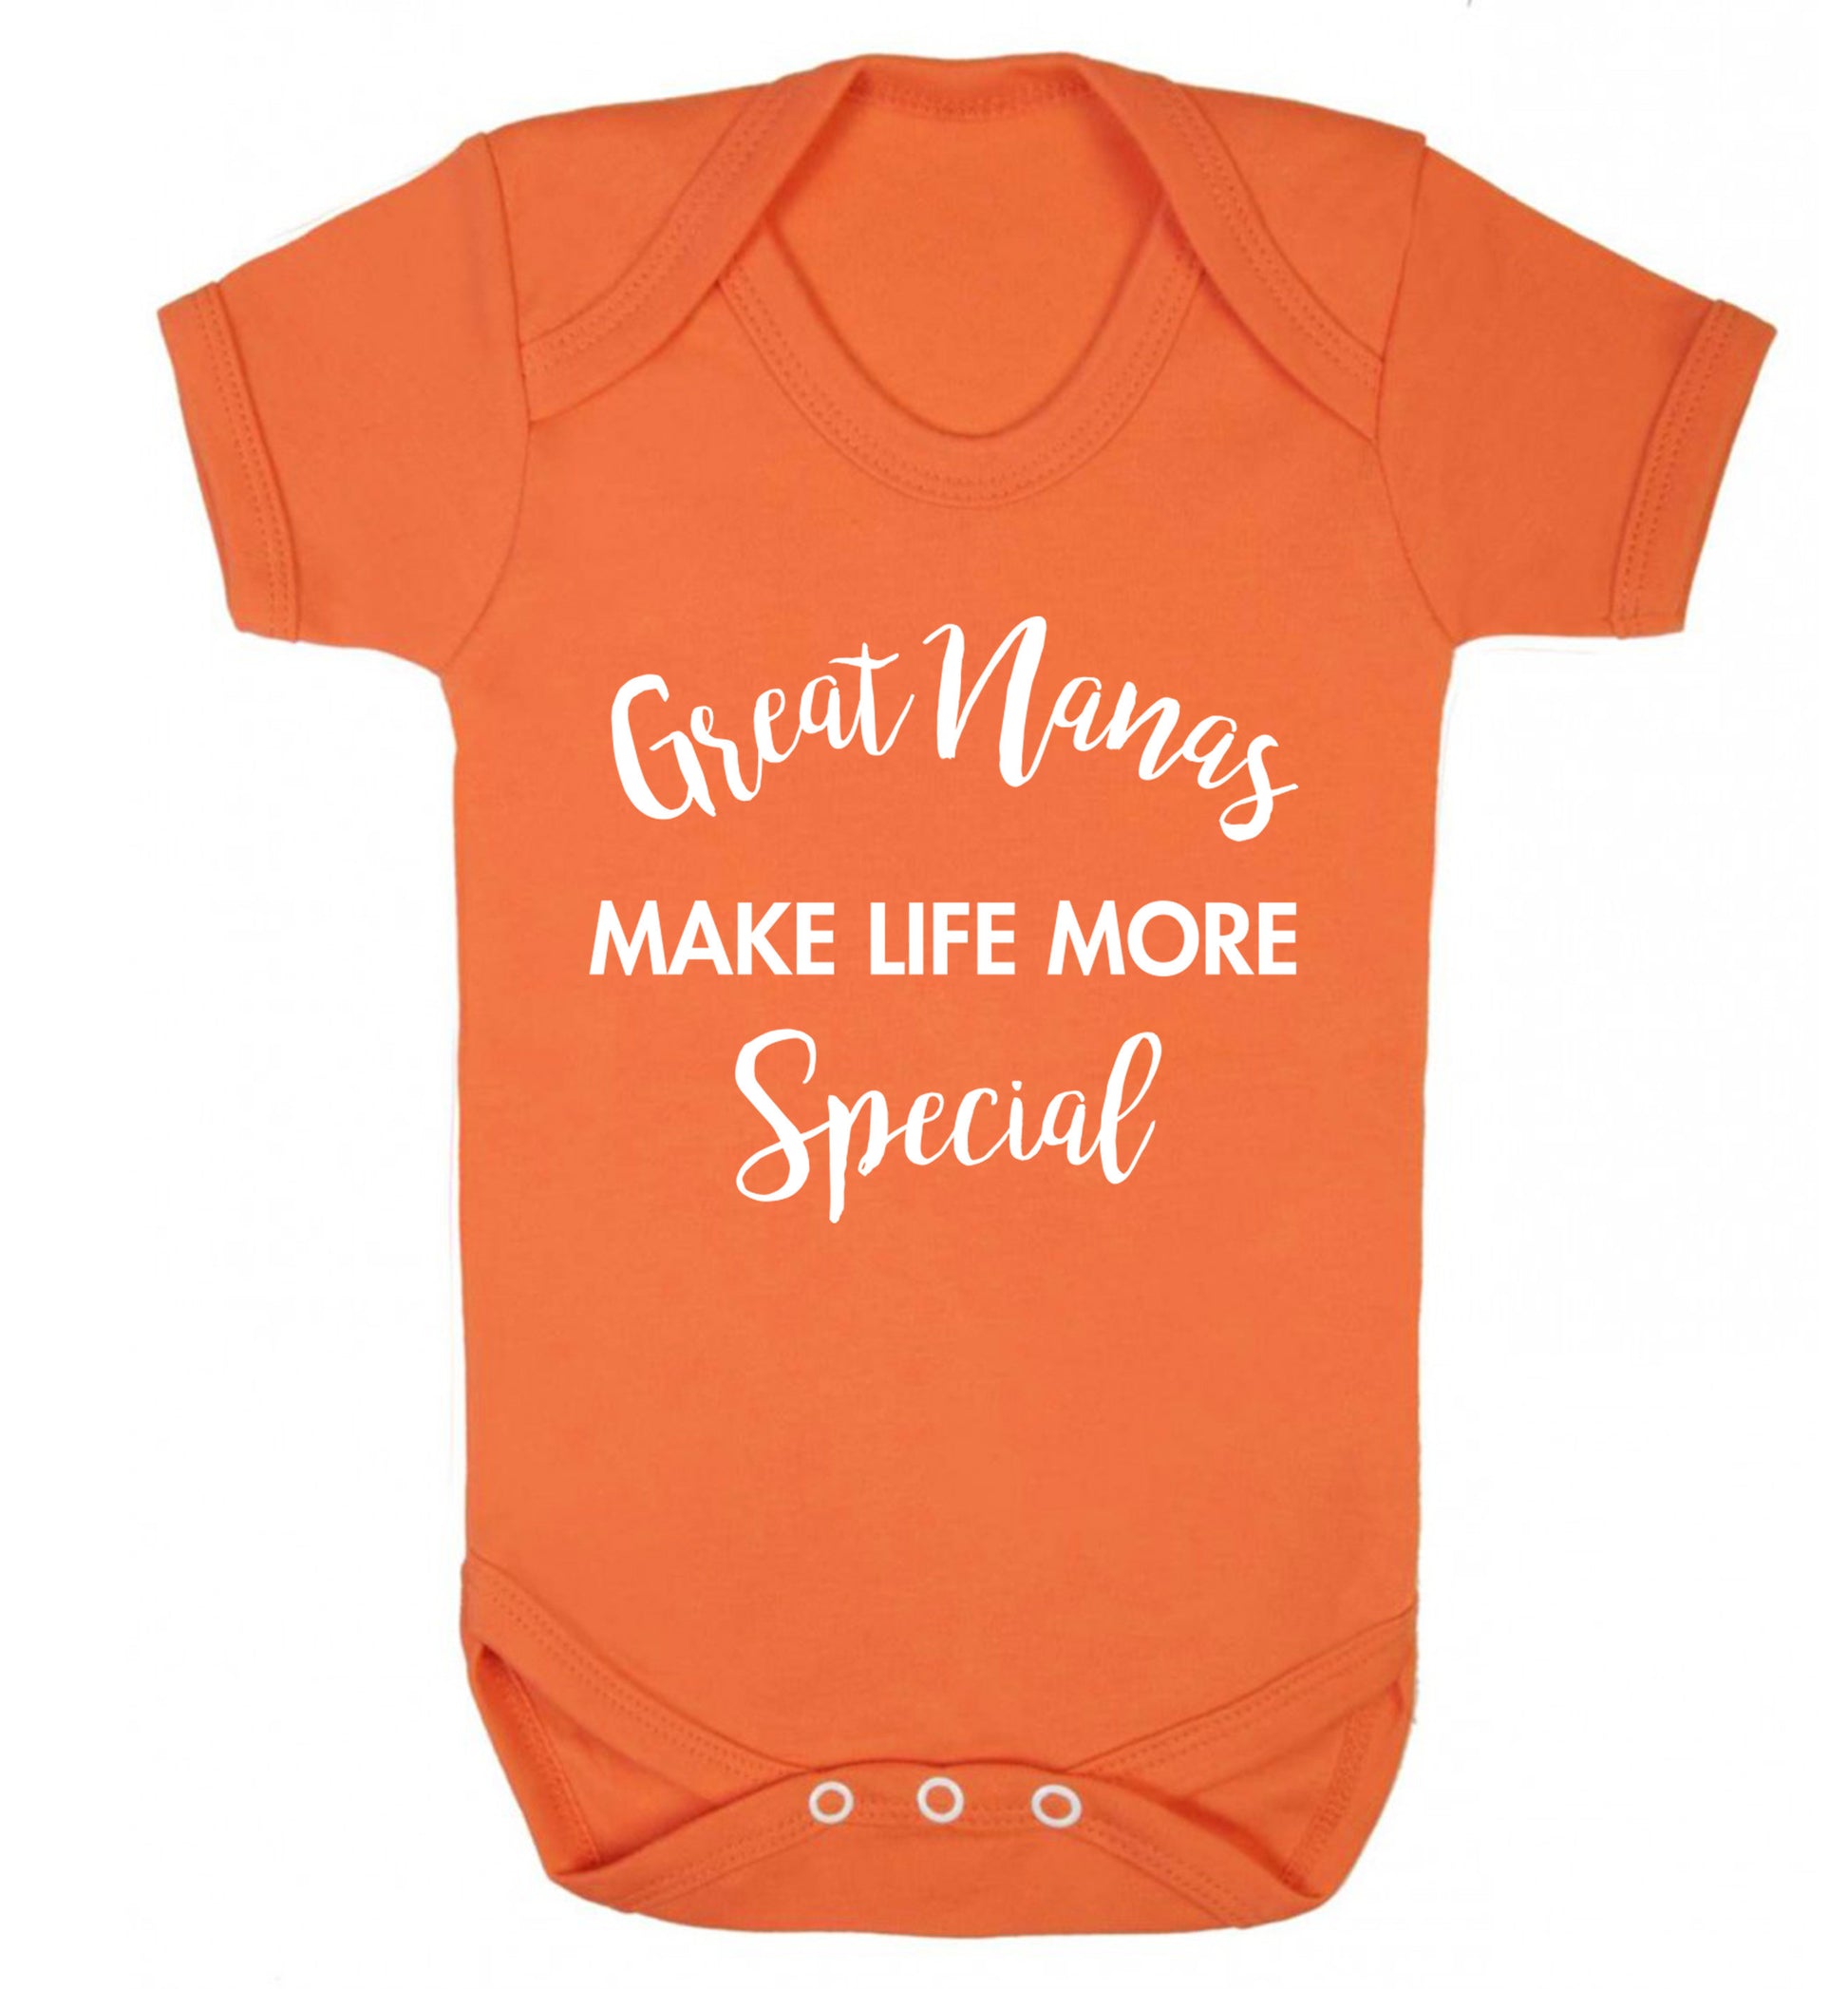 Great nanas make life more special Baby Vest orange 18-24 months